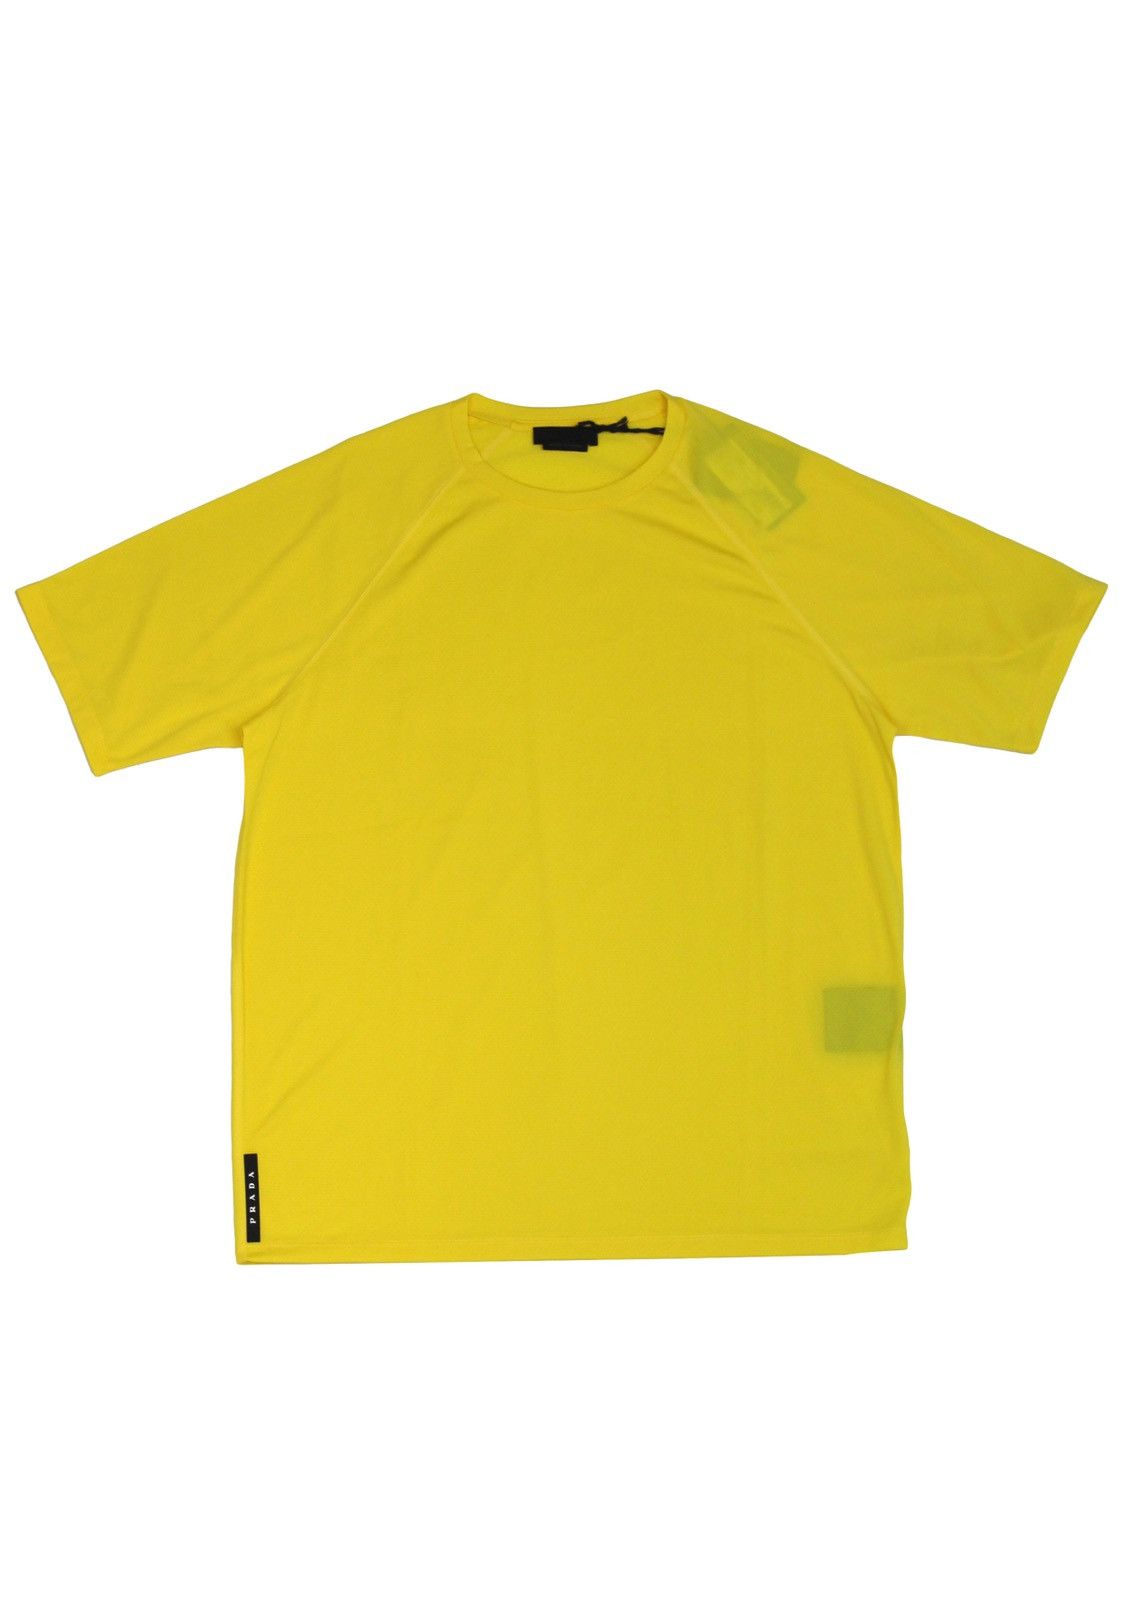 Prada Prada Yellow Dry Fit Shirt Size US M / EU 48-50 / 2 - 1 Preview